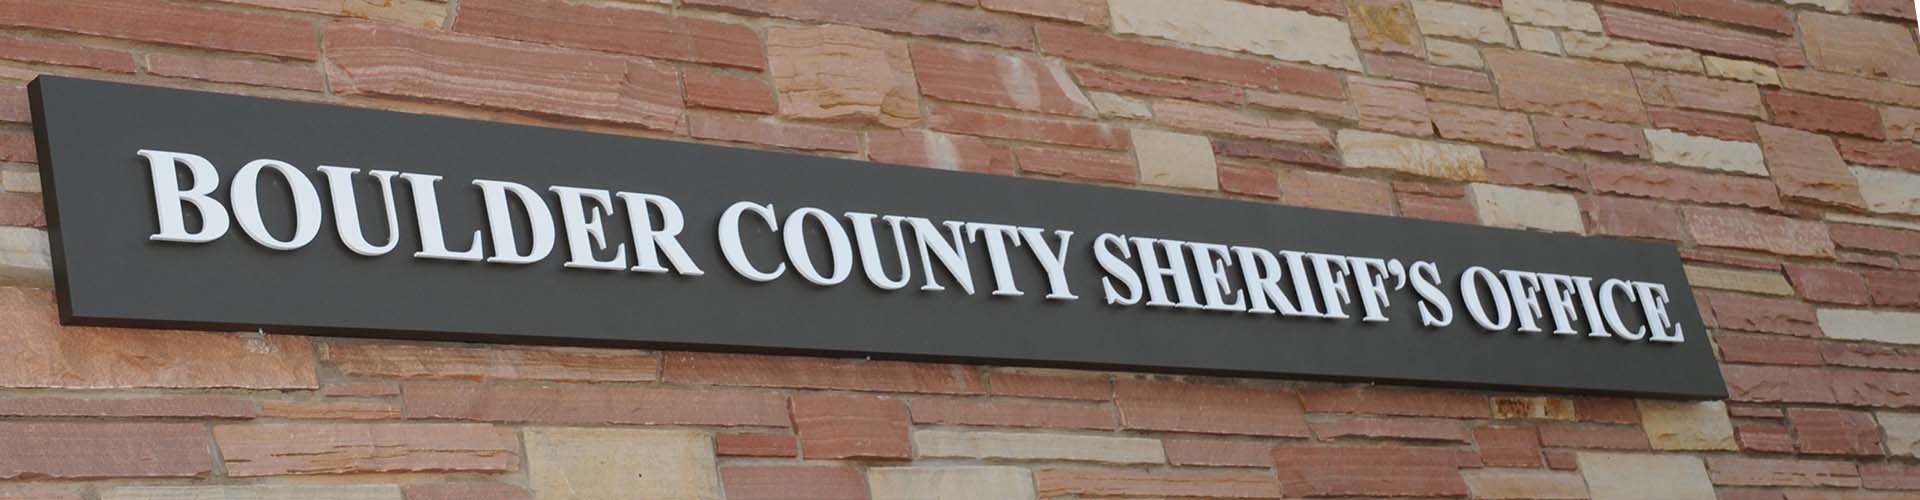 Sheriff headquarters sign